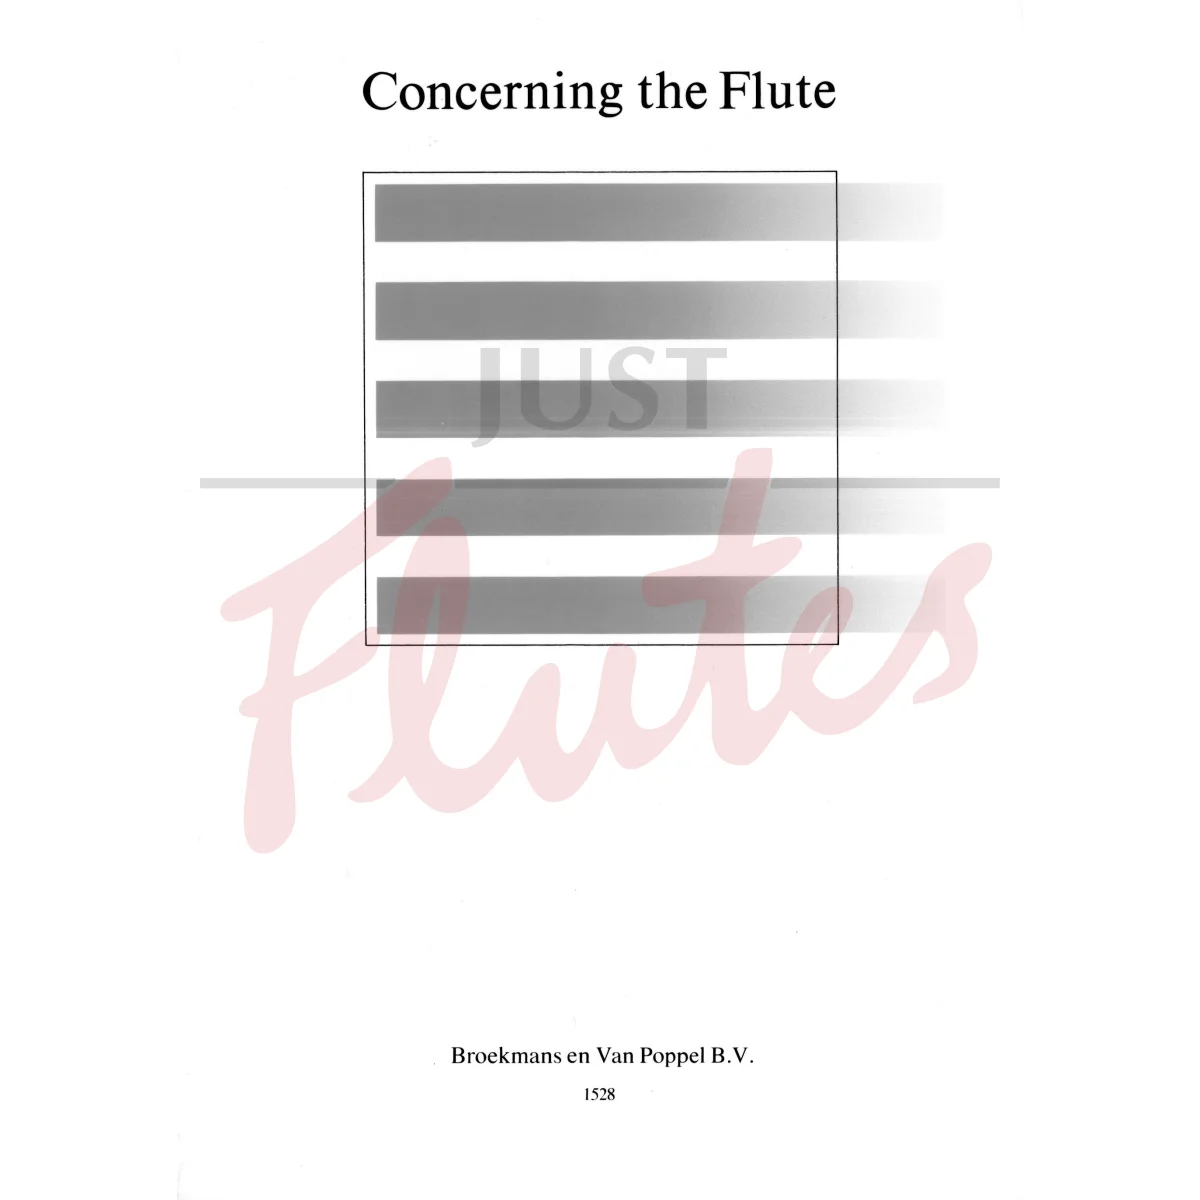 Concerning the Flute